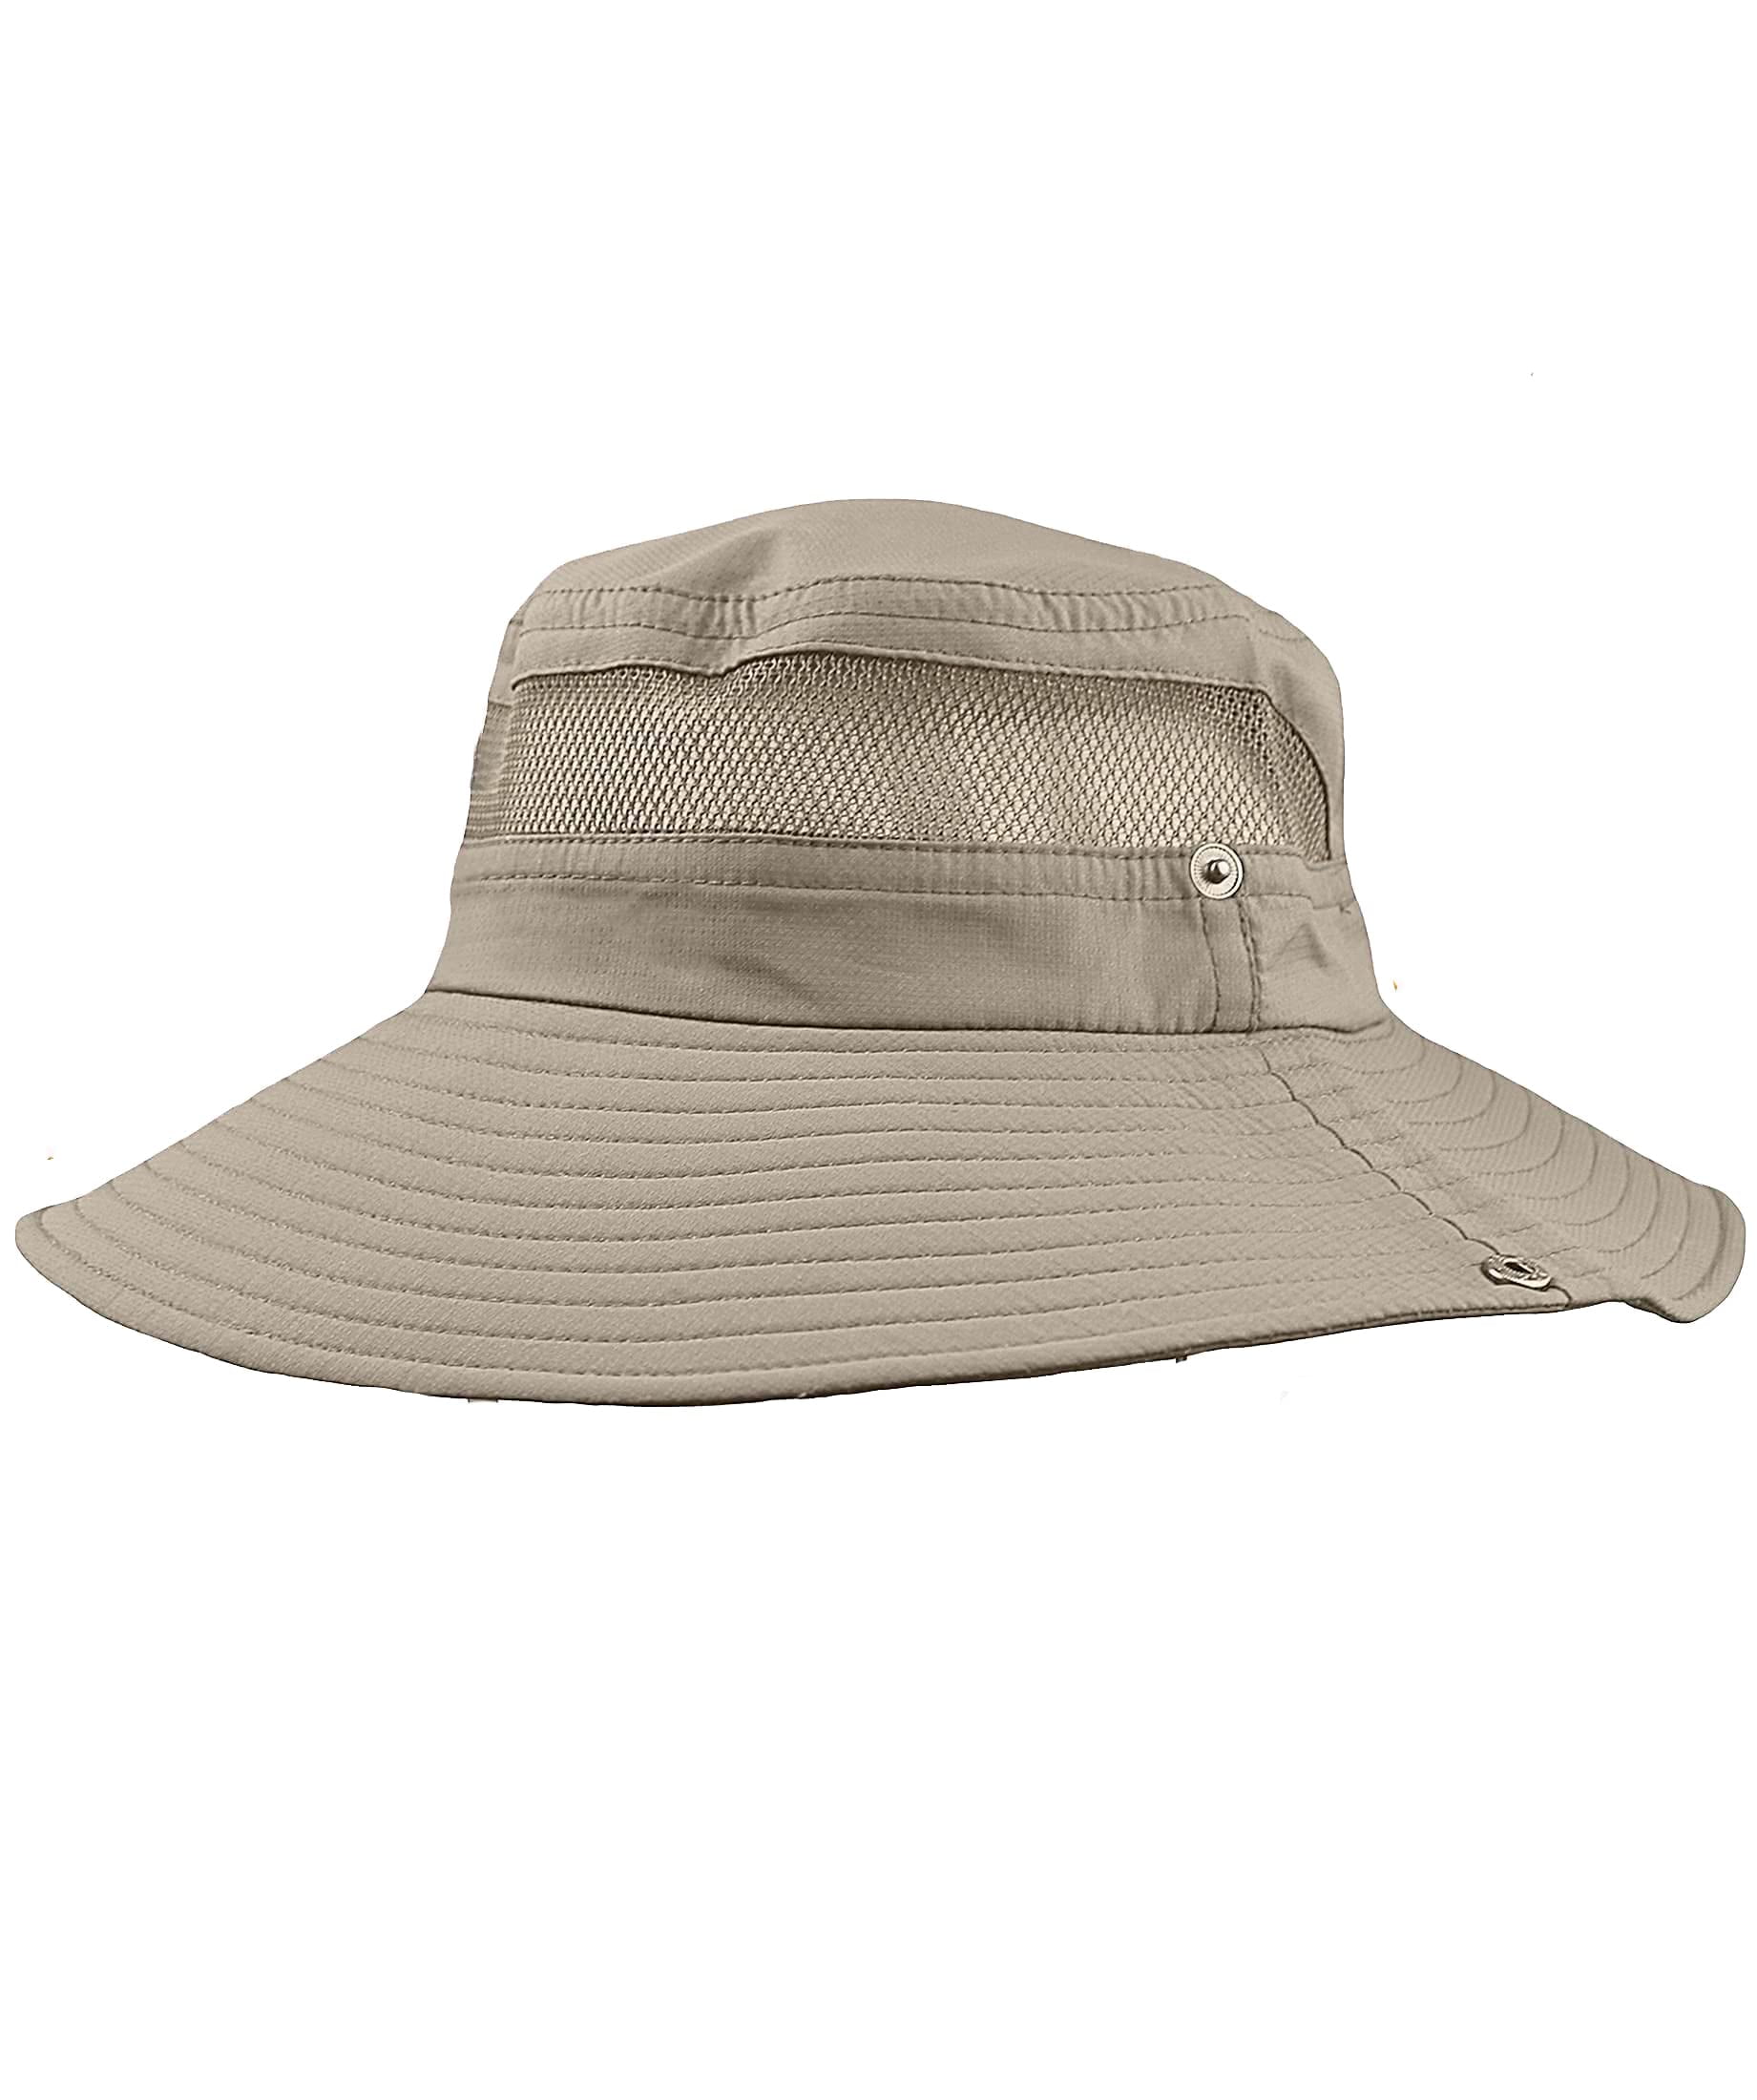 GearTOP Fishing Hat UPF 50 Wide Brim Sun Hat for Men Thailand